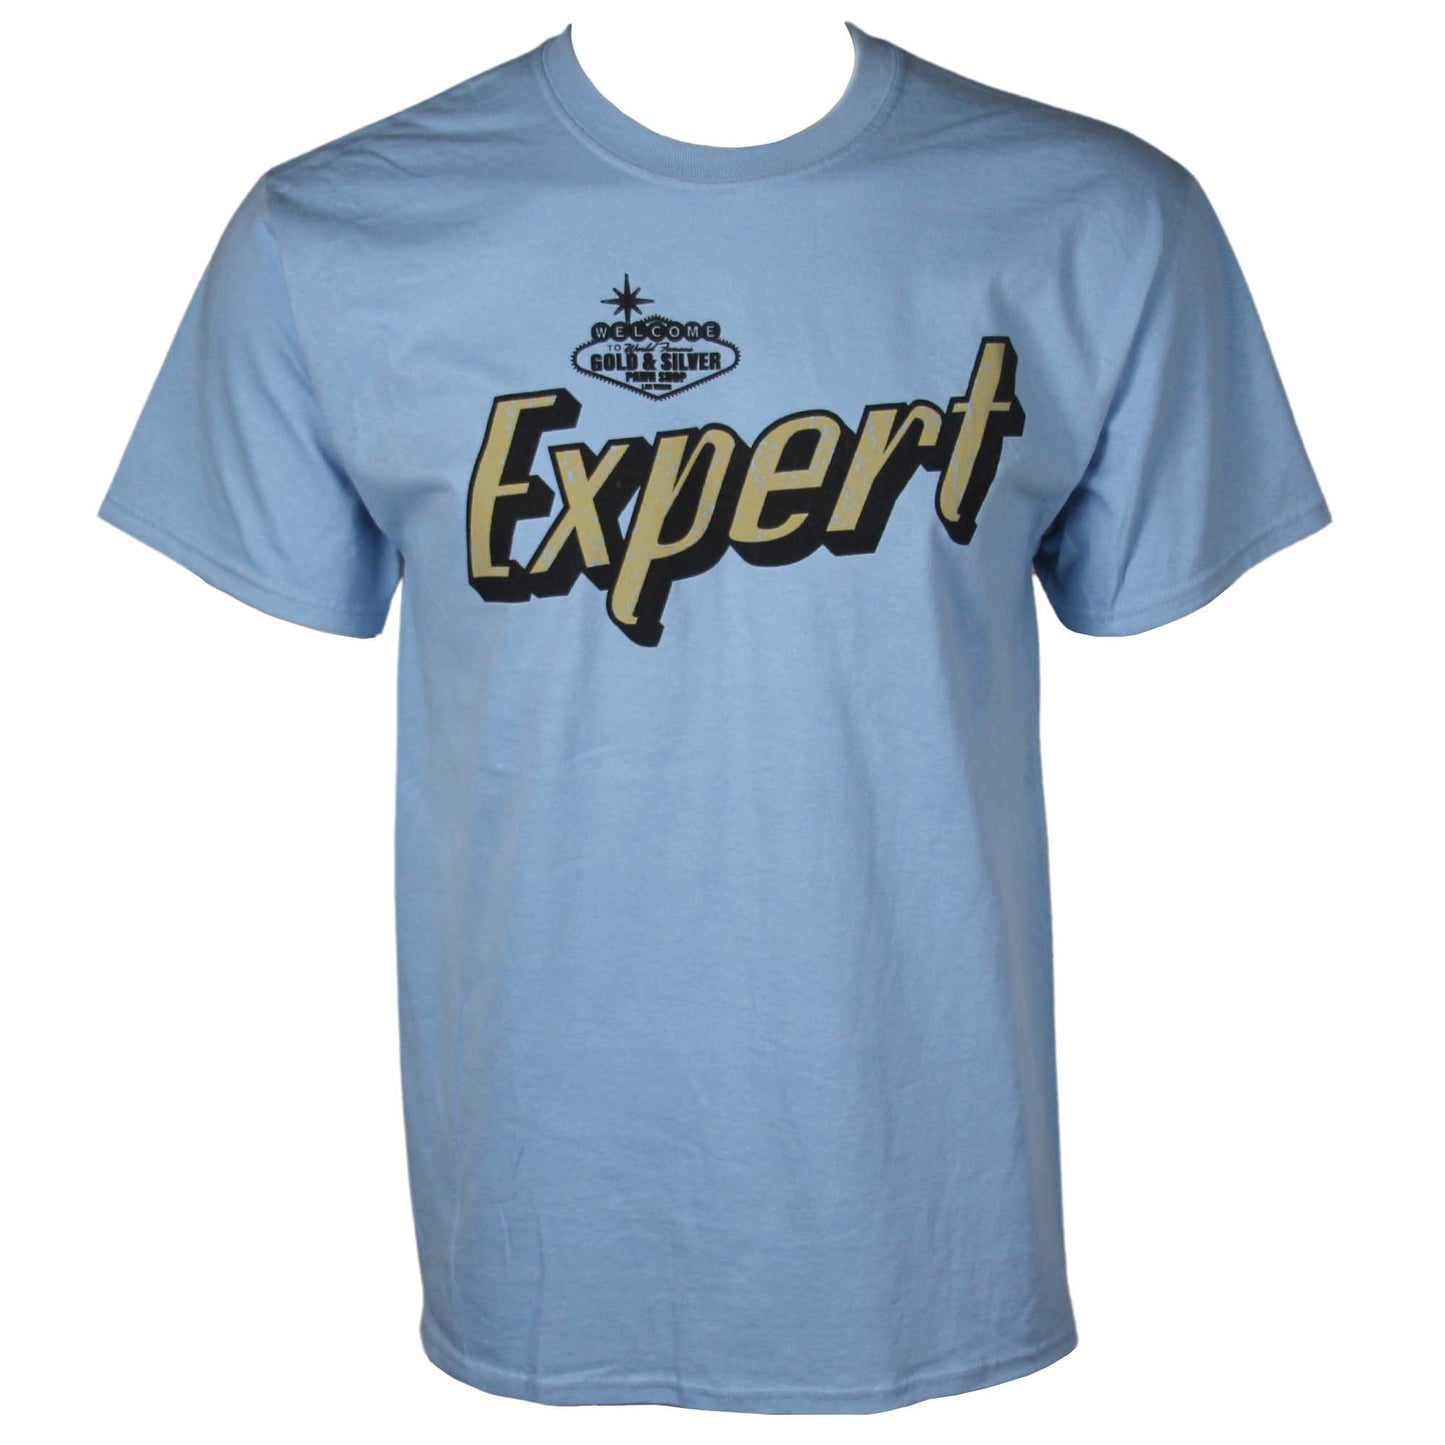 Gold & Silver Pawn Shop "Expert" Round Neck T-Shirt Blue